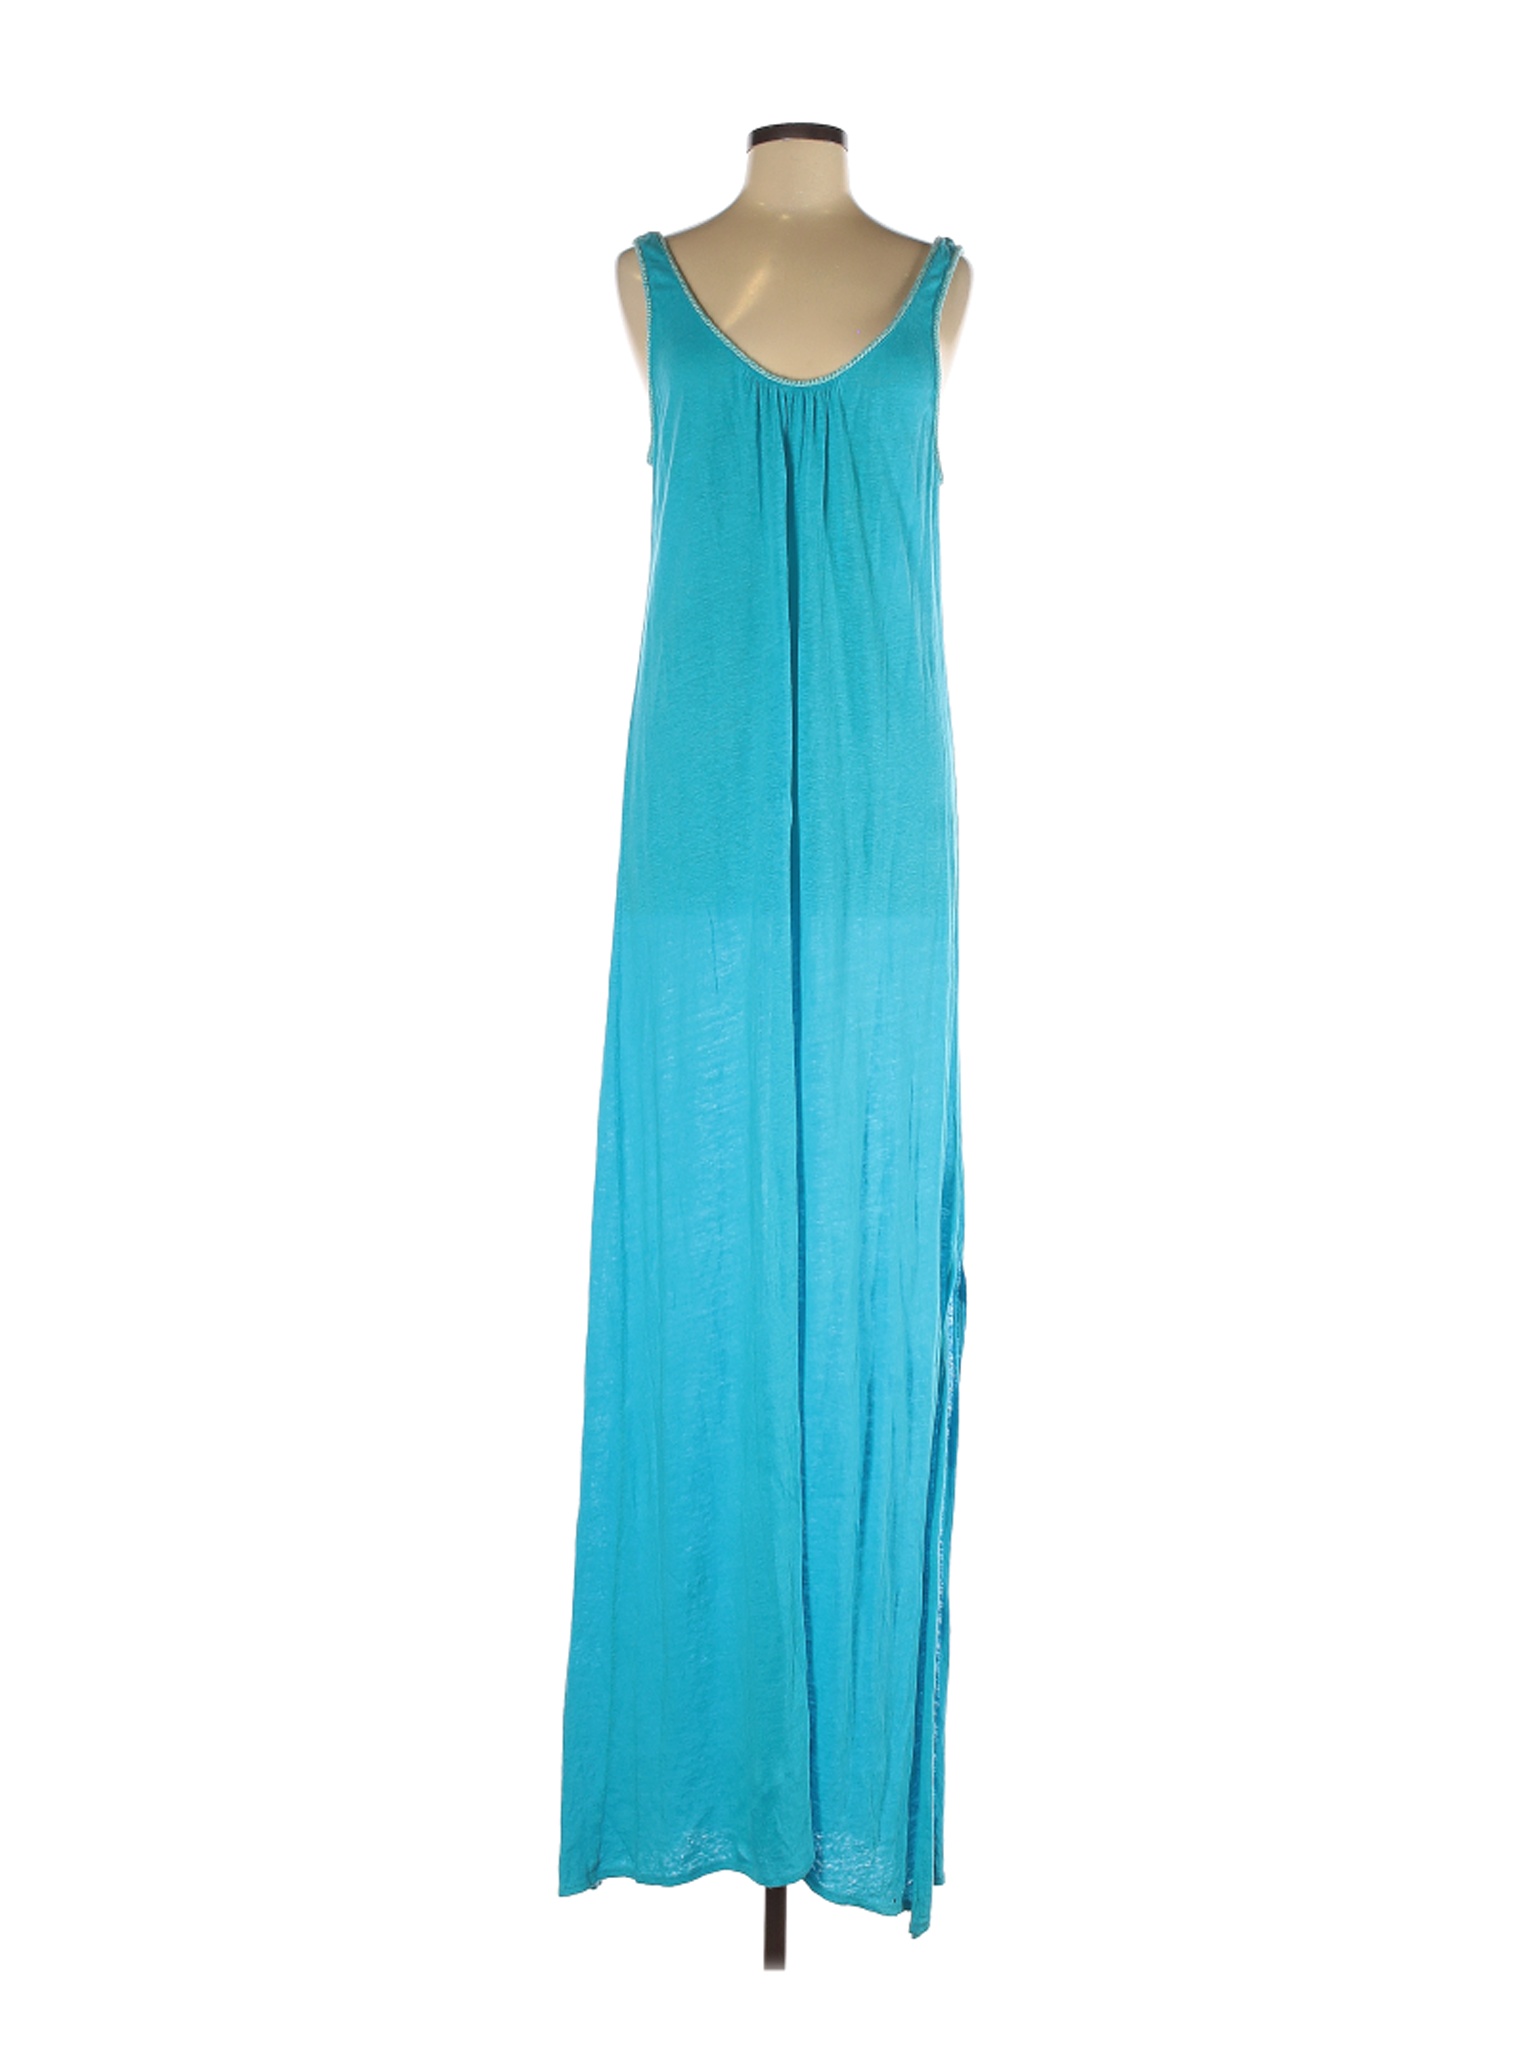 Calypso St. Barth Women Blue Casual Dress M | eBay